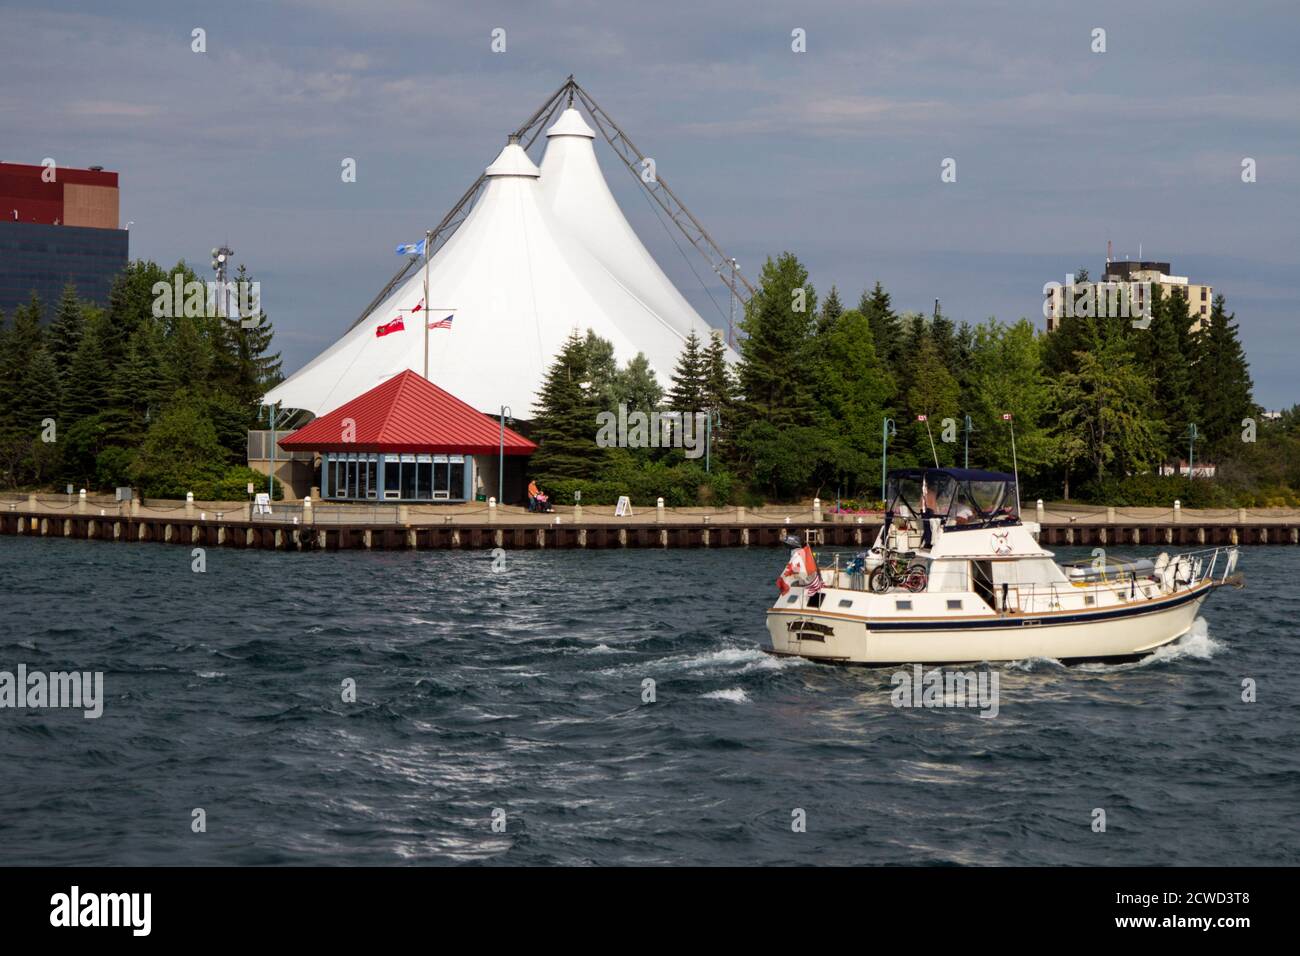 Sault Ste Marie, Ontario, Kanada - 9. August 2015: Das Hafengebiet der kleinen Stadt Sault Ste Marie, Ontario an den Großen Seen gelegen. Stockfoto